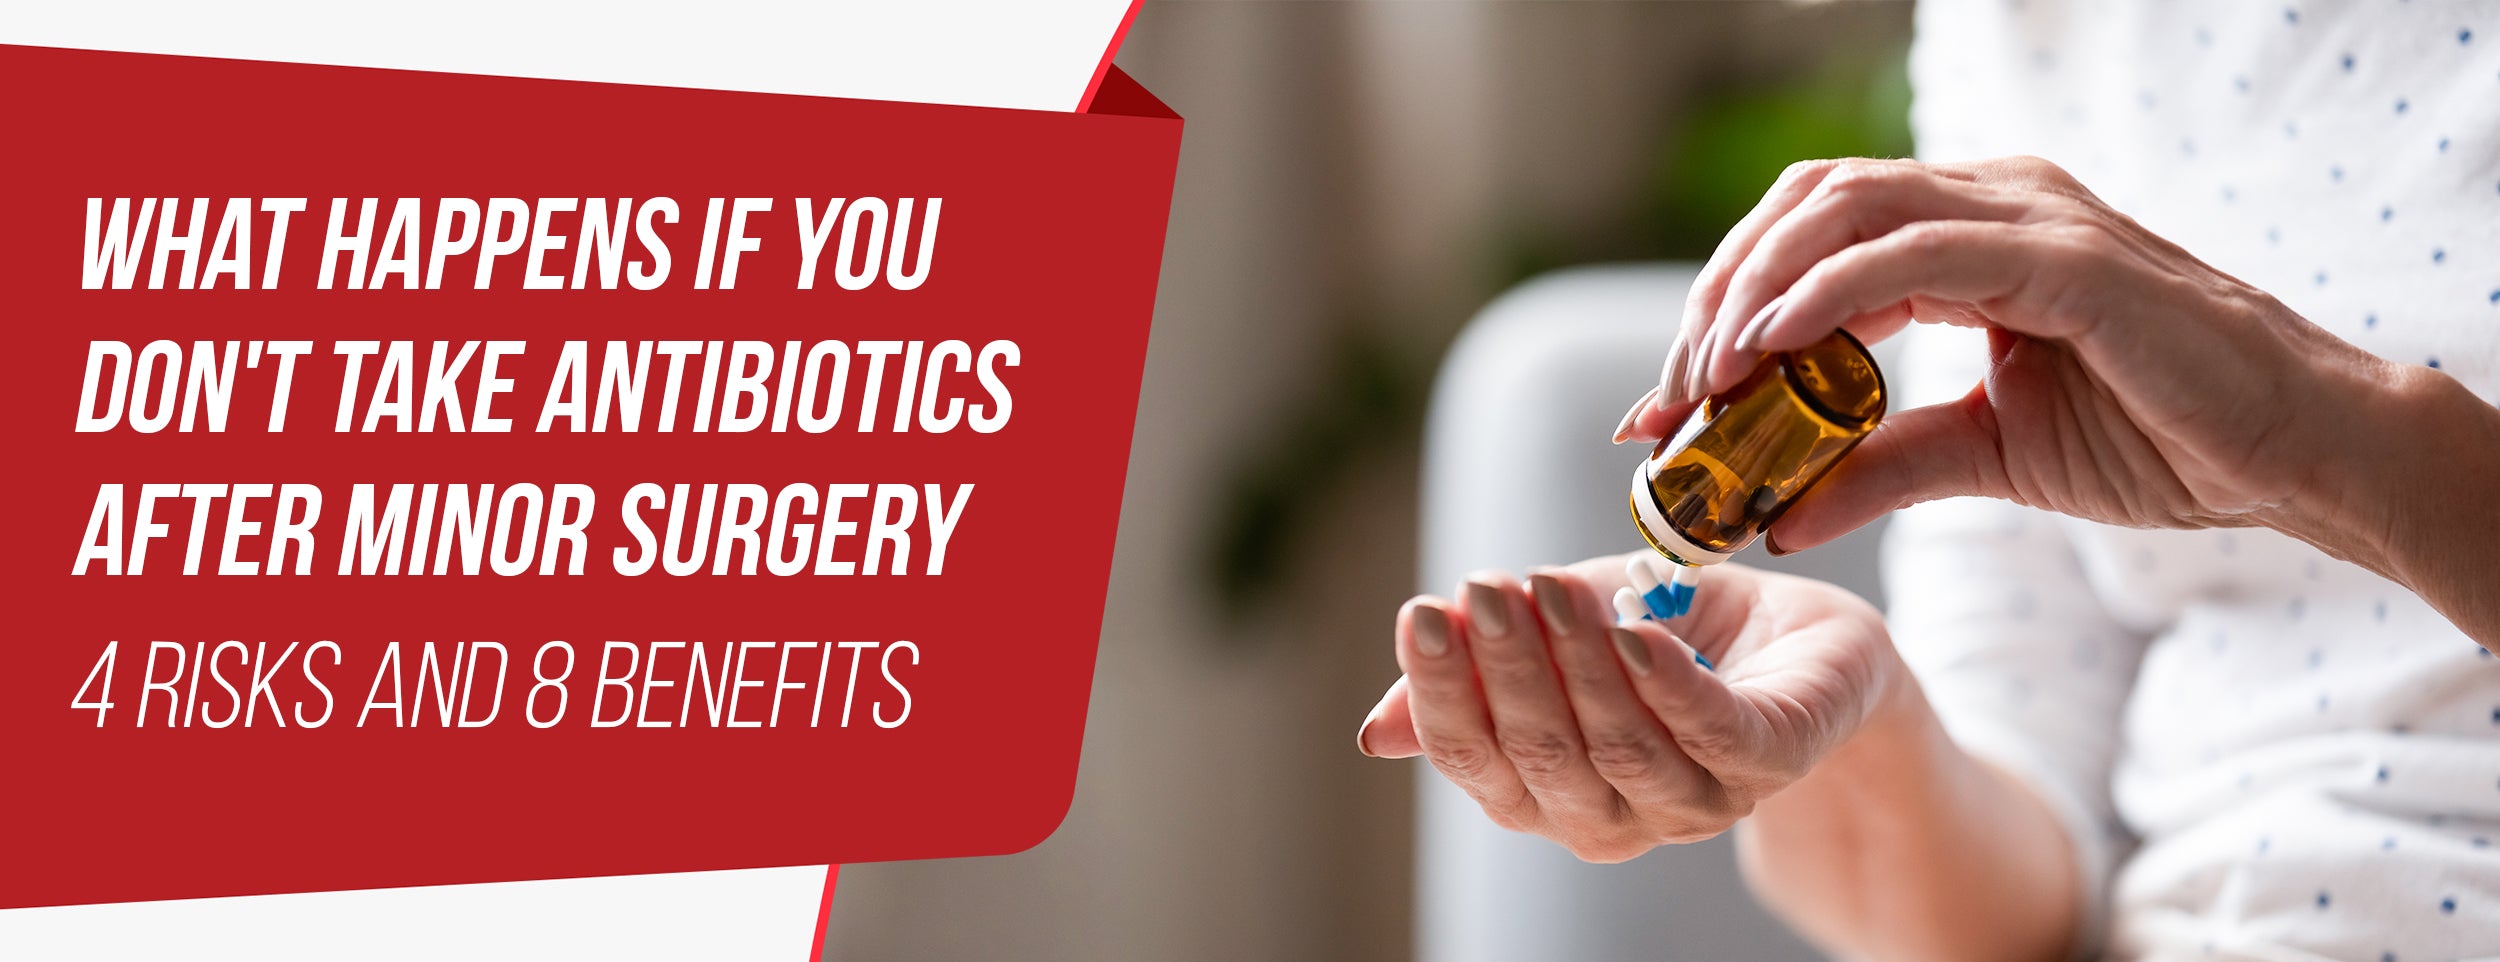 4 Risks &  Benefits of Not Taking Antibiotics After Minor Surgery